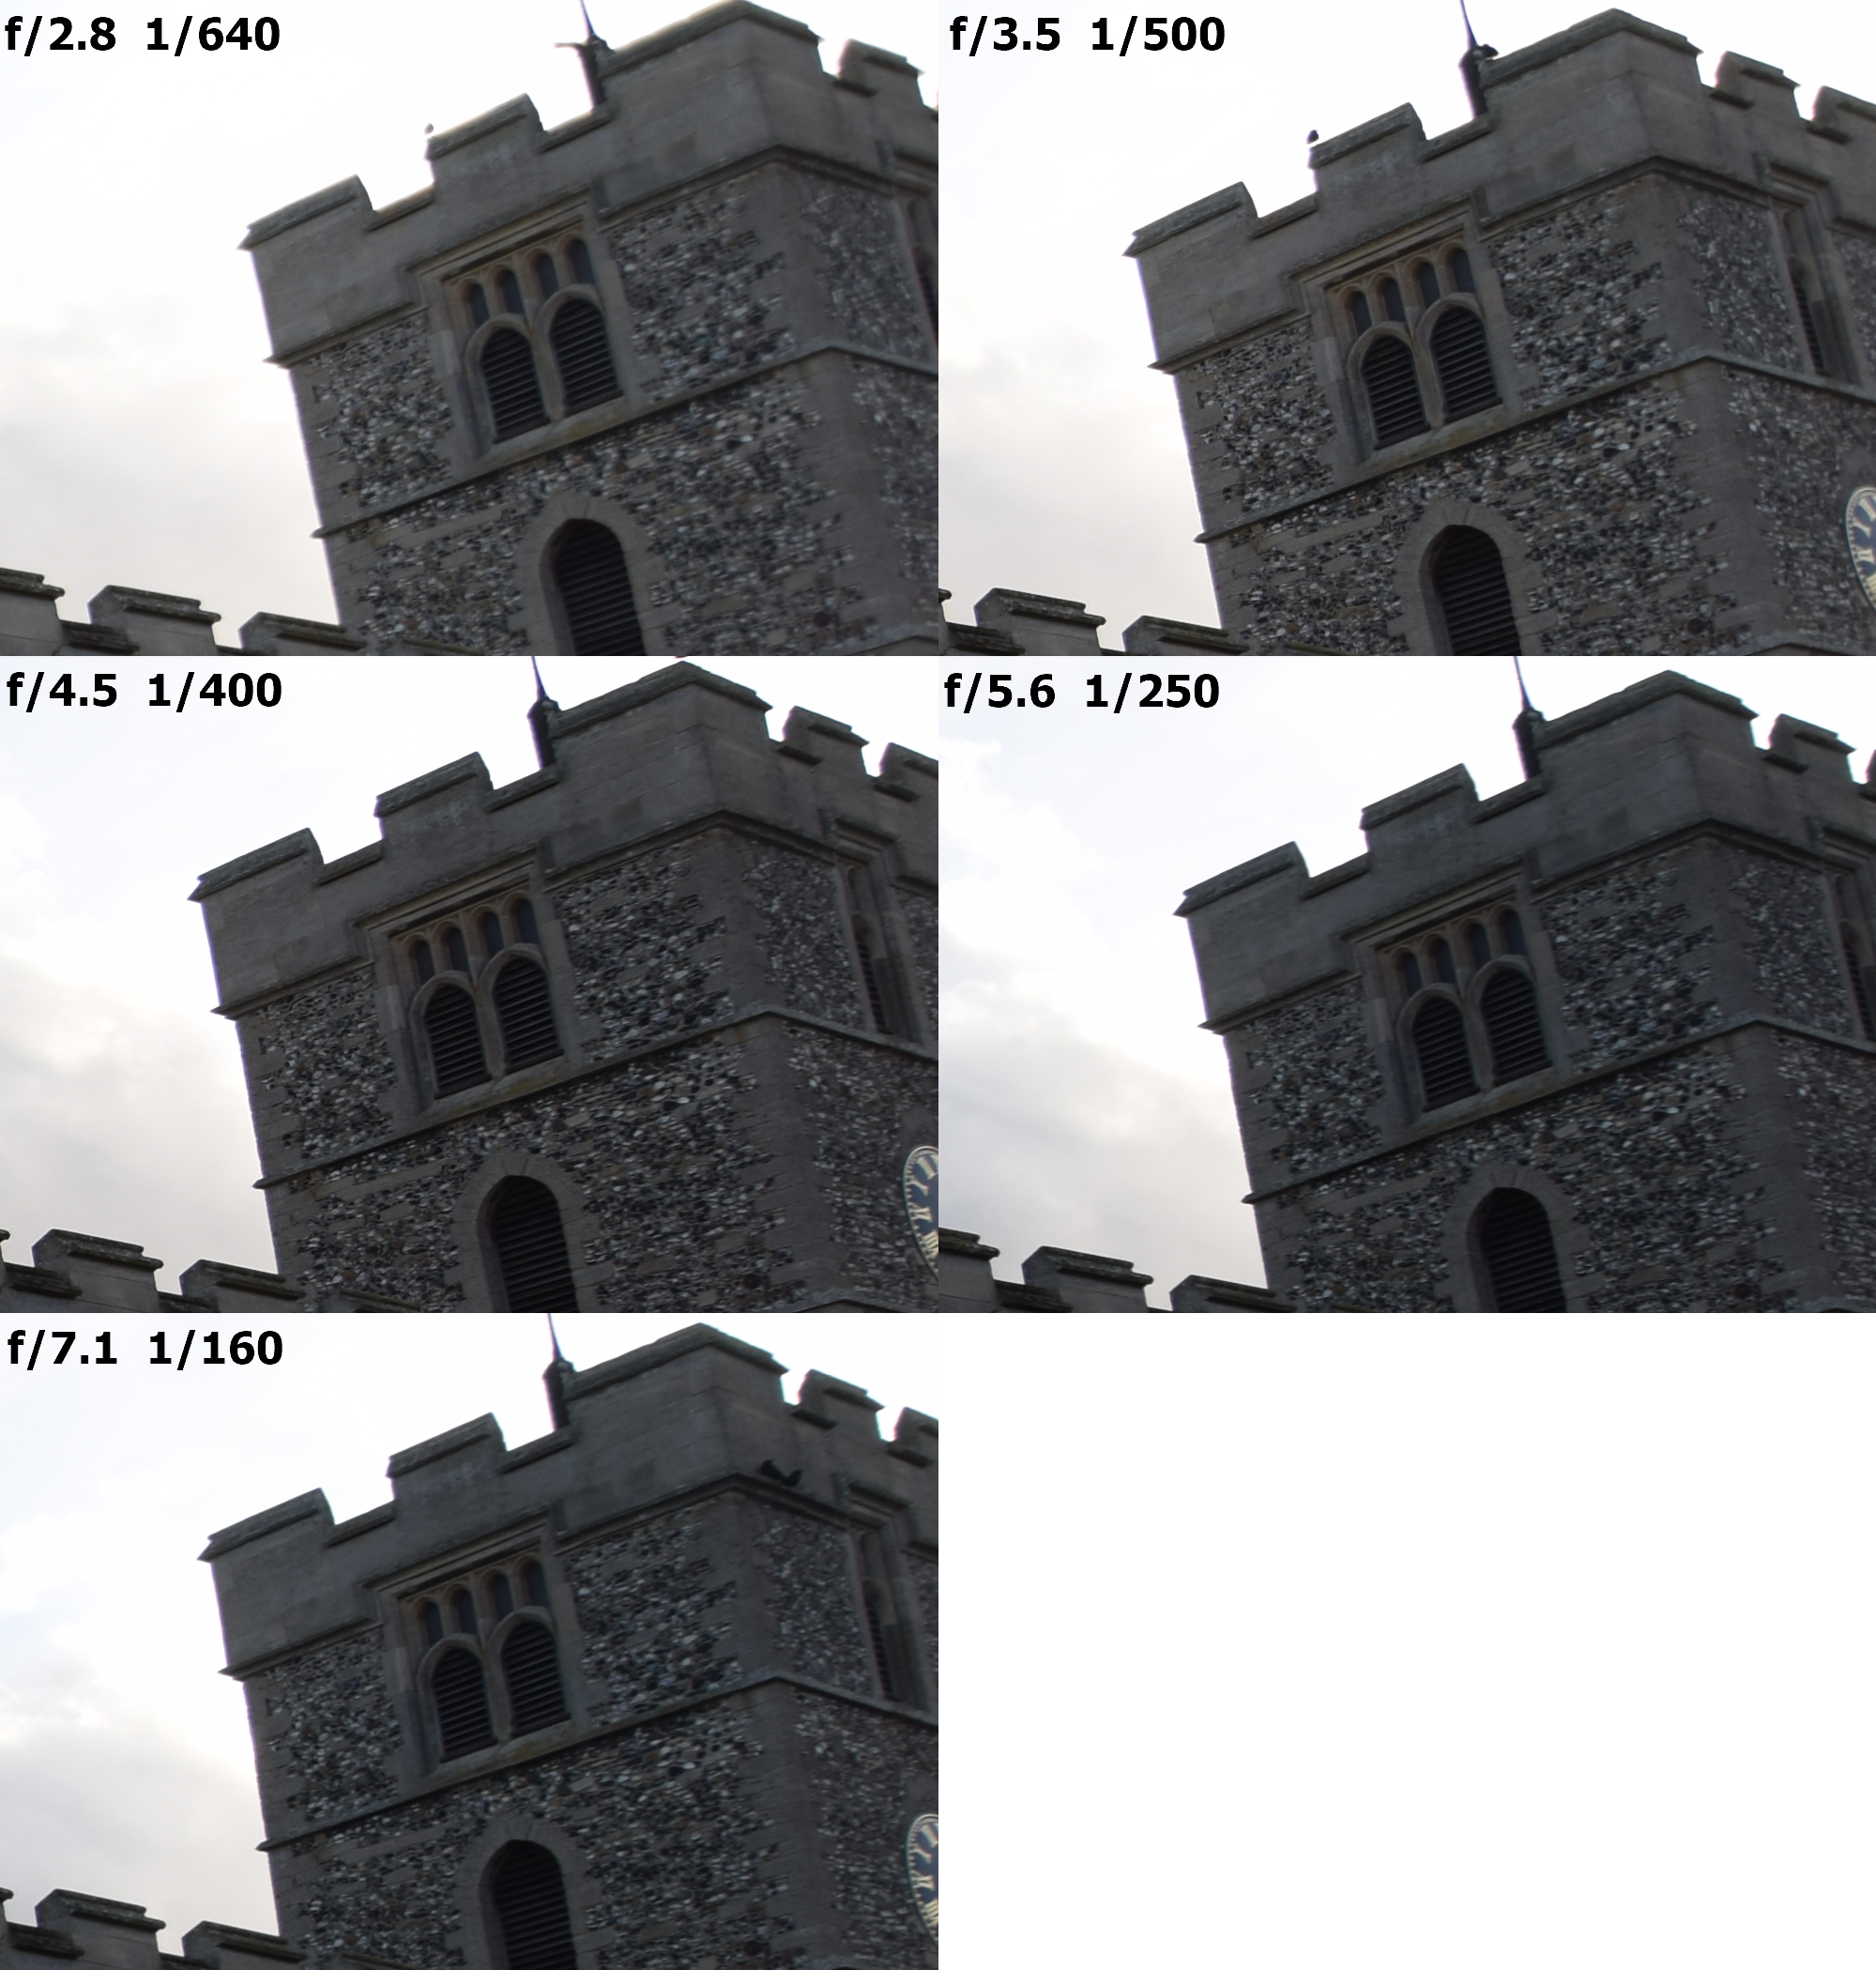 Tokina 11-16mm f/2.8 lateral chromatic aberration 13mm, Waterbeach St John Evangelist church